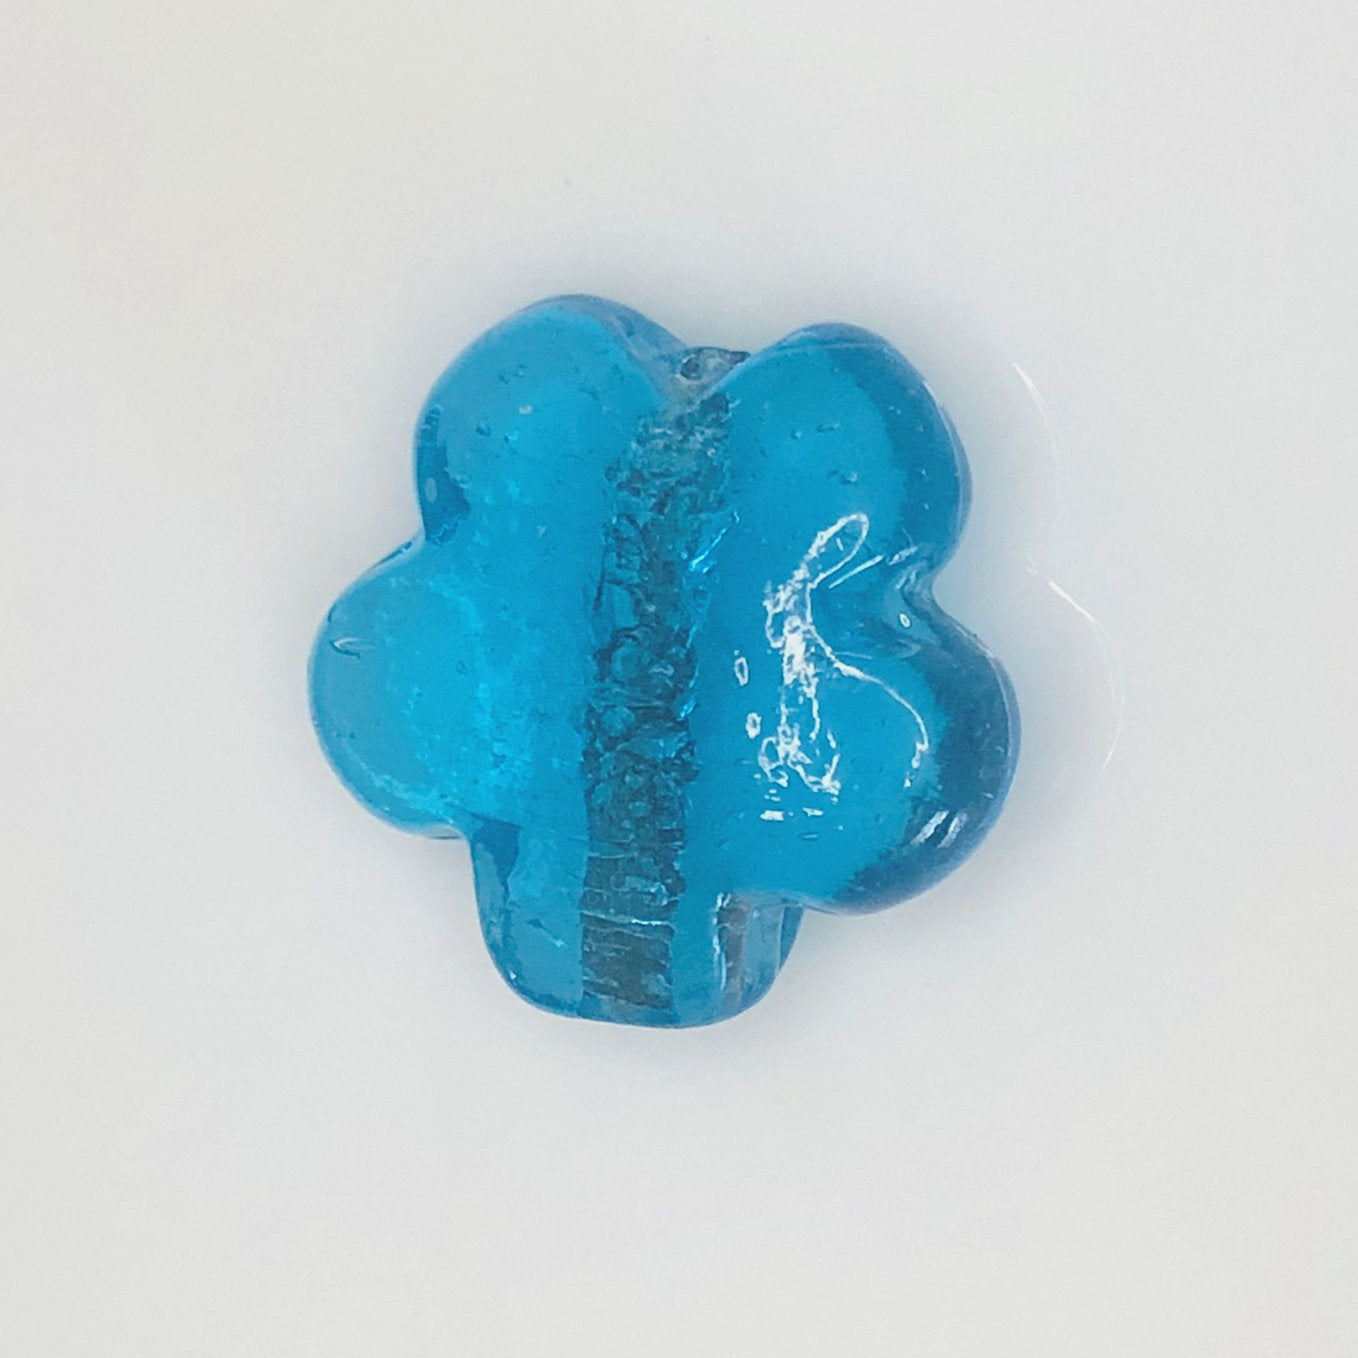 Transparent Capri Blue Flower Lampwork Glass Focal Bead, 40 x 42 mm - 3 mm Hole